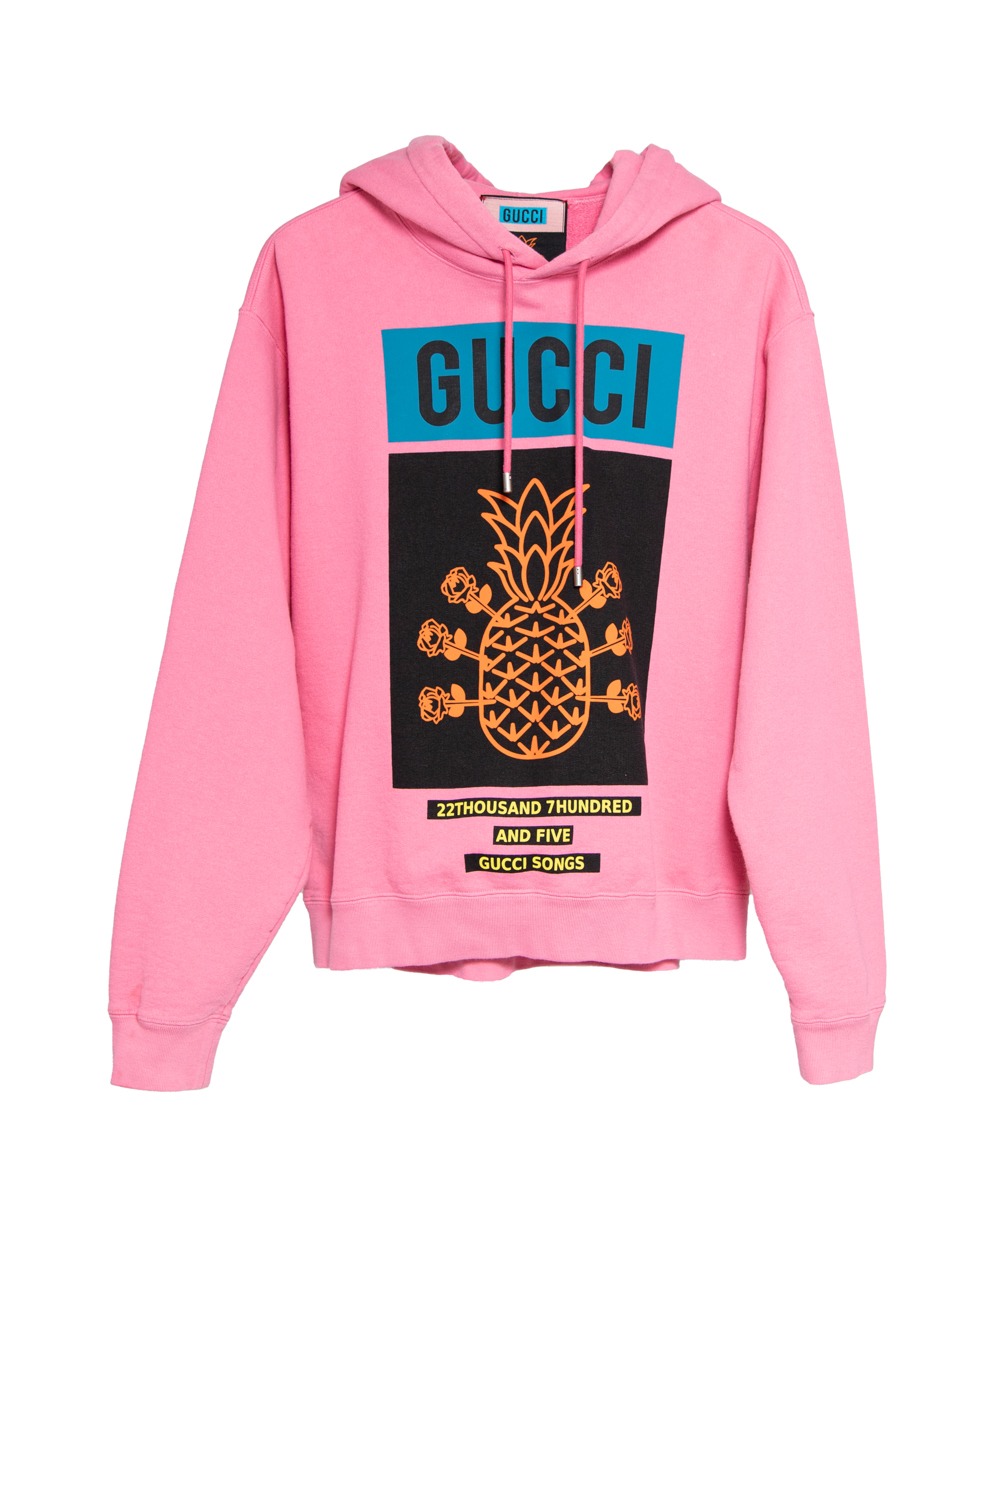 Gucci x Musixmatch "22,705" Kapuzenpullover in Pink